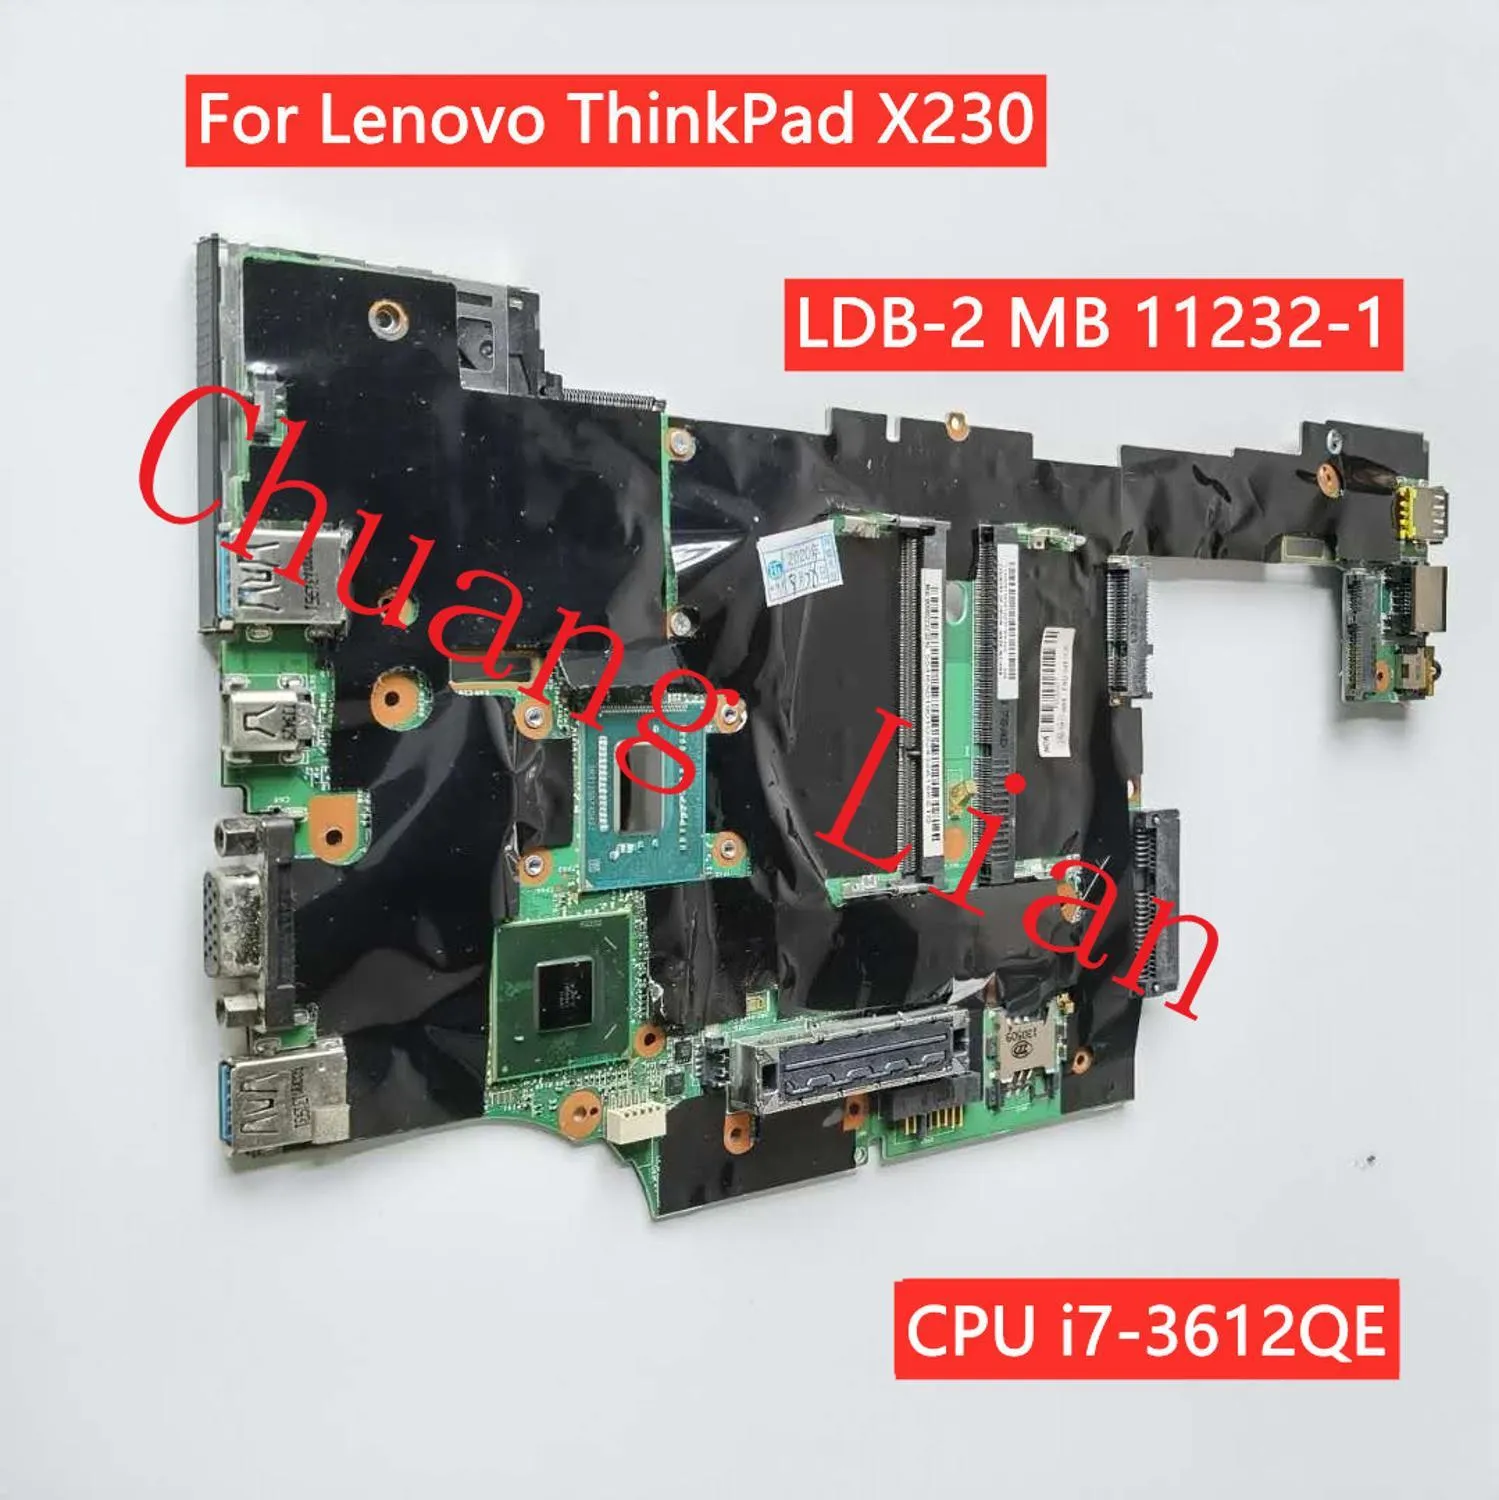 Carte mère LDB2 MB 112321 pour Lenovo Thinkpad X230 X230I Branche mère avec CPU I73612QE I7 3615QE I7 3687U I7 3520M entièrement testée entièrement testée